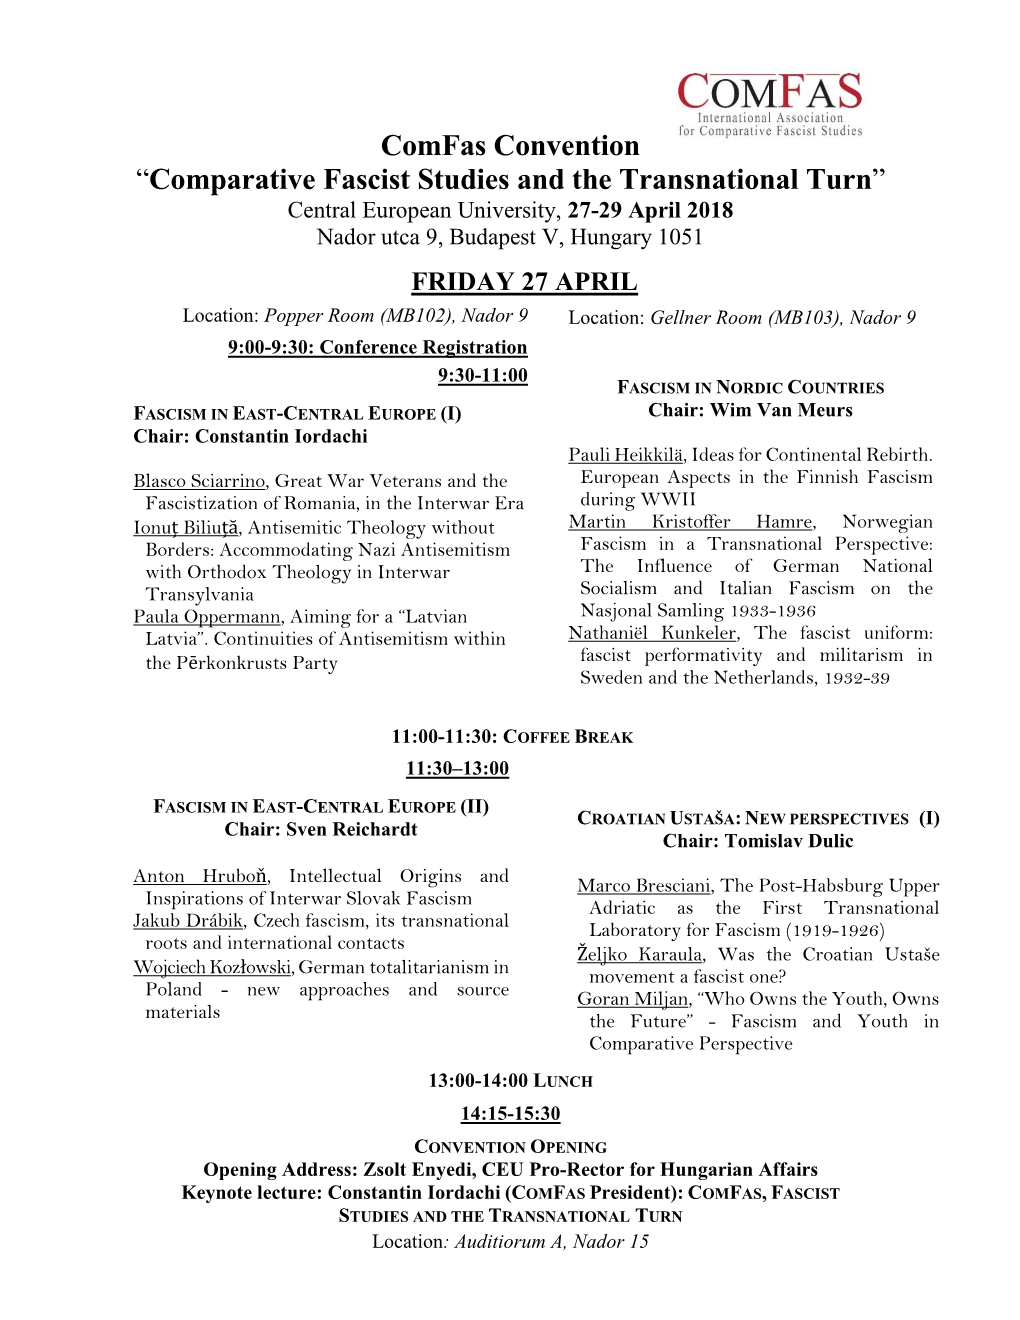 Comfas Convention “Comparative Fascist Studies and the Transnational Turn” Central European University, 27-29 April 2018 Nador Utca 9, Budapest V, Hungary 1051